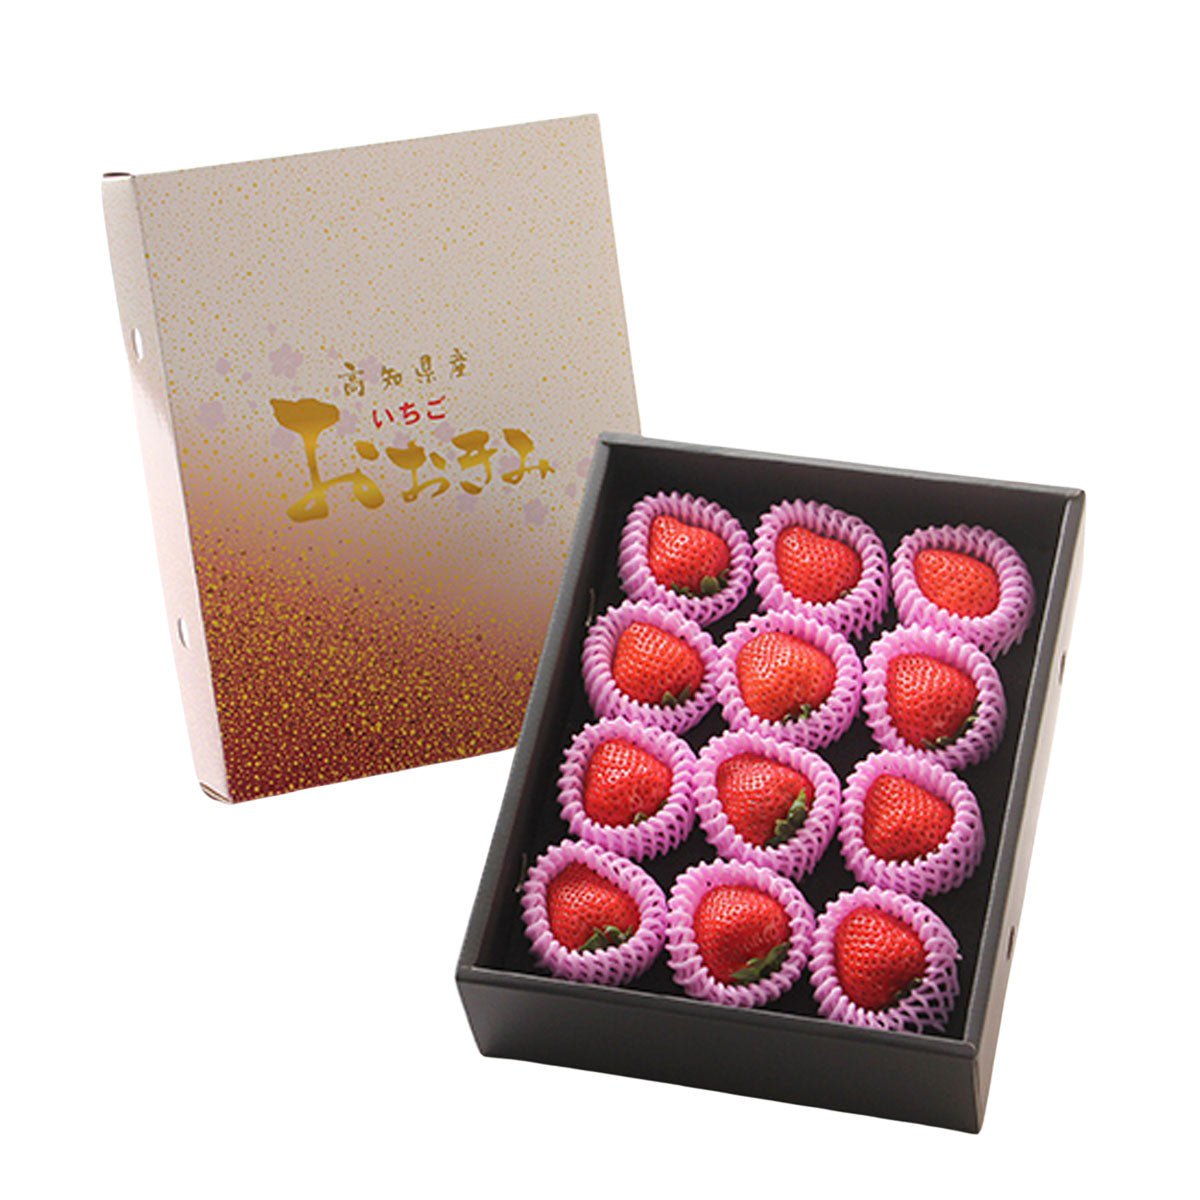 Mar 1st - 2nd Delivery ONLY | Kochi Premium Okimi Strawberry Gift Box - Tokyo Fresh Direct